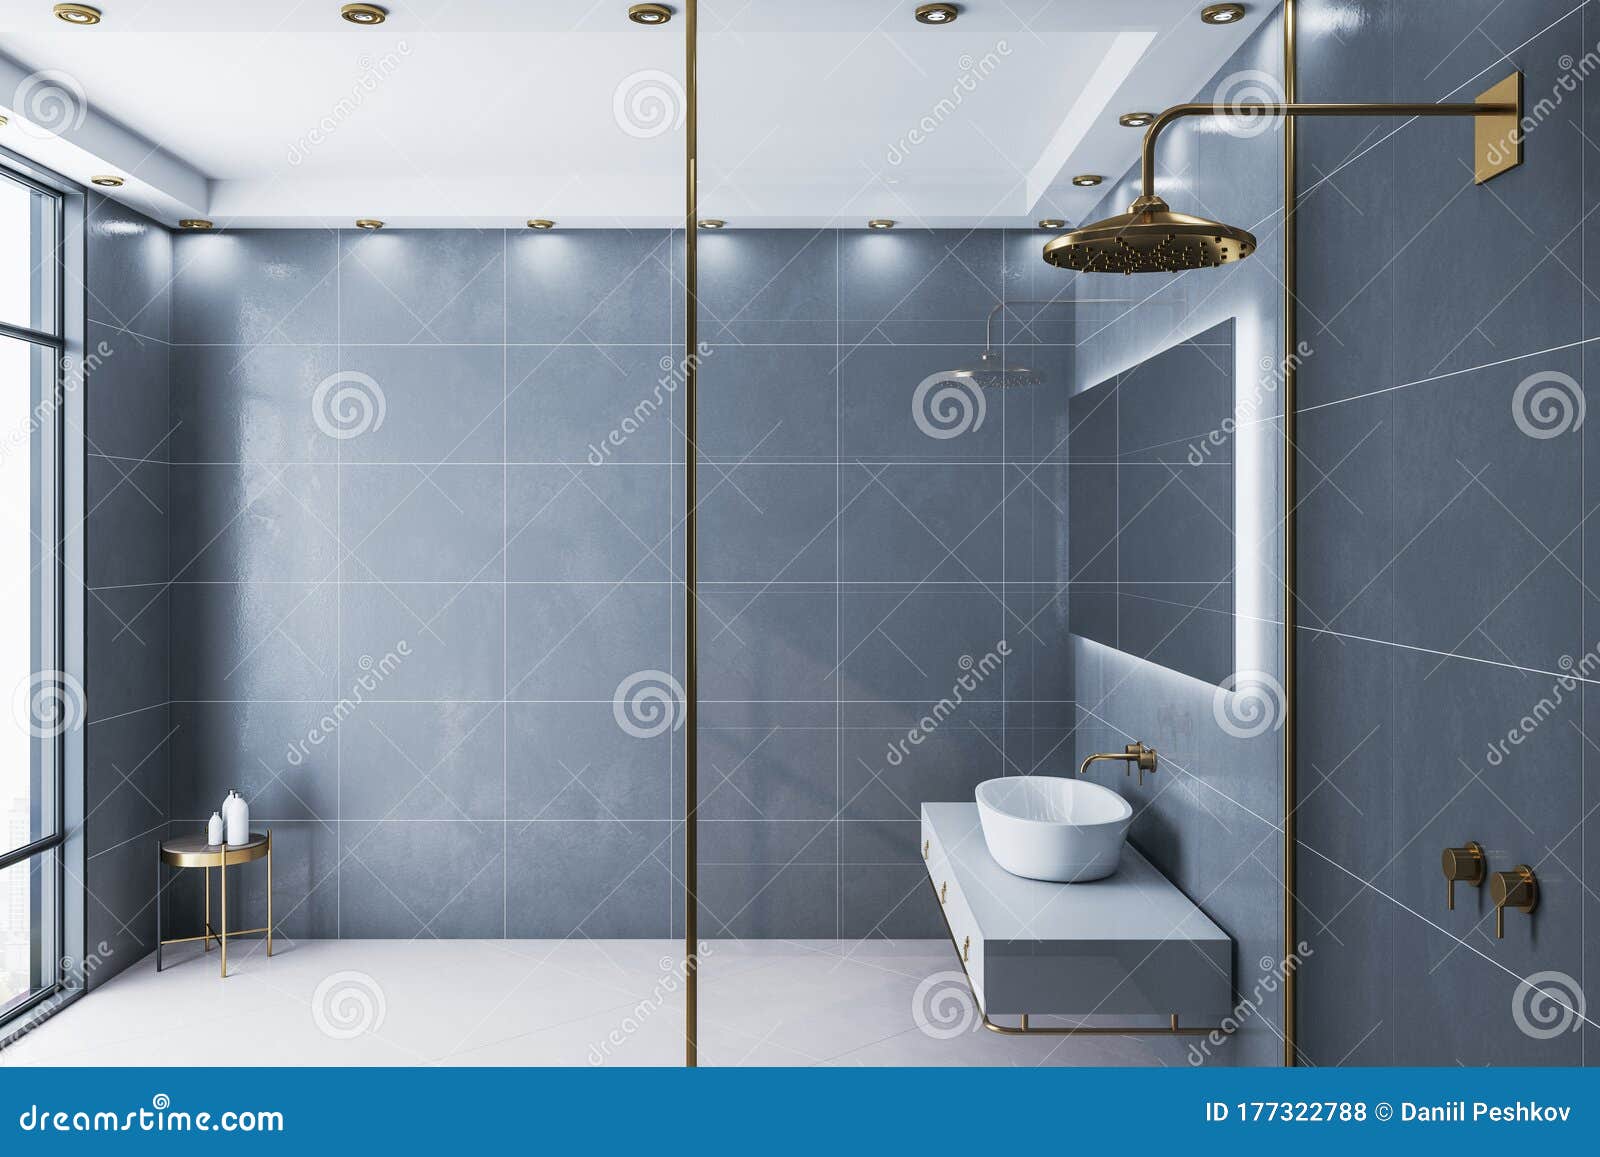 Luxury loft bathroom stock illustration. Illustration of apartment ...